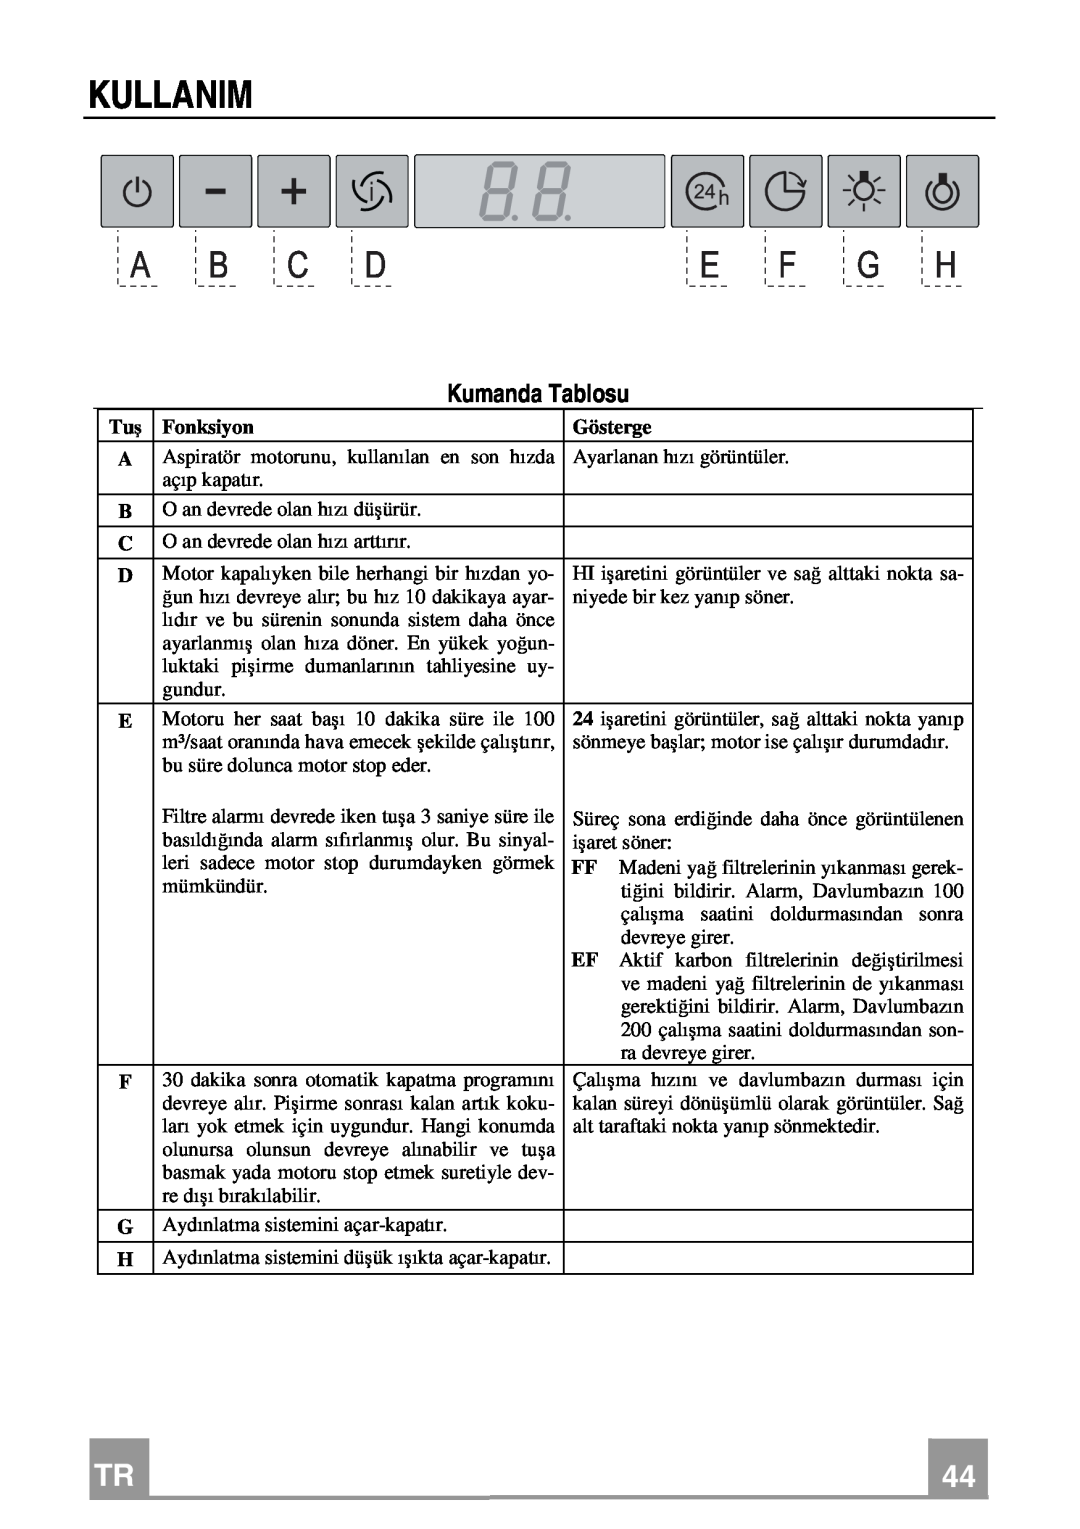 Franke Consumer Products FMY 907 manual Kullanim, Kumanda Tablosu, A B C De F G H, Fonksiyon, Gösterge 